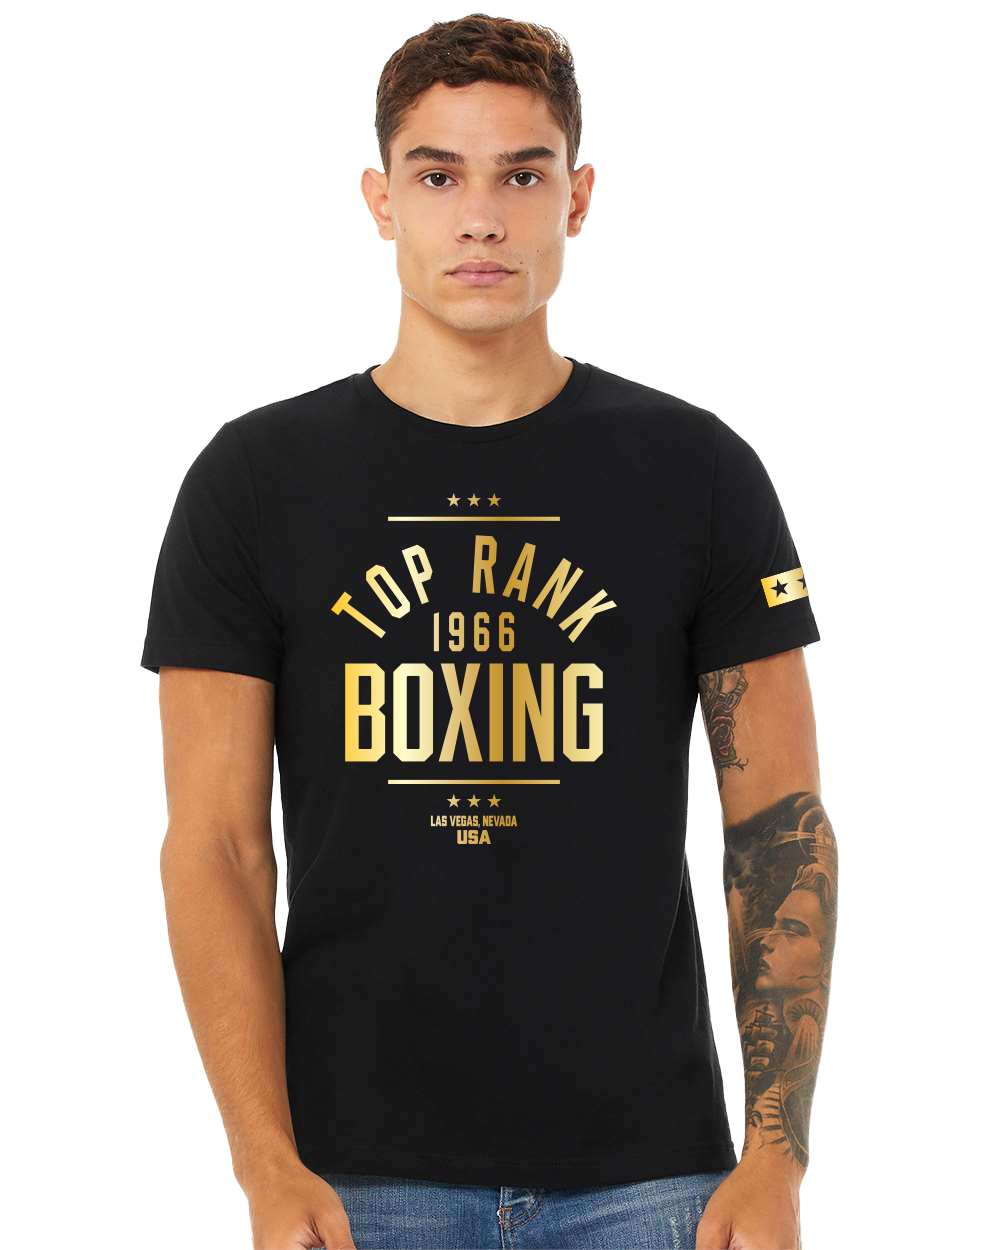 Top Rank Gold Foil Logo Boxing T-Shirt